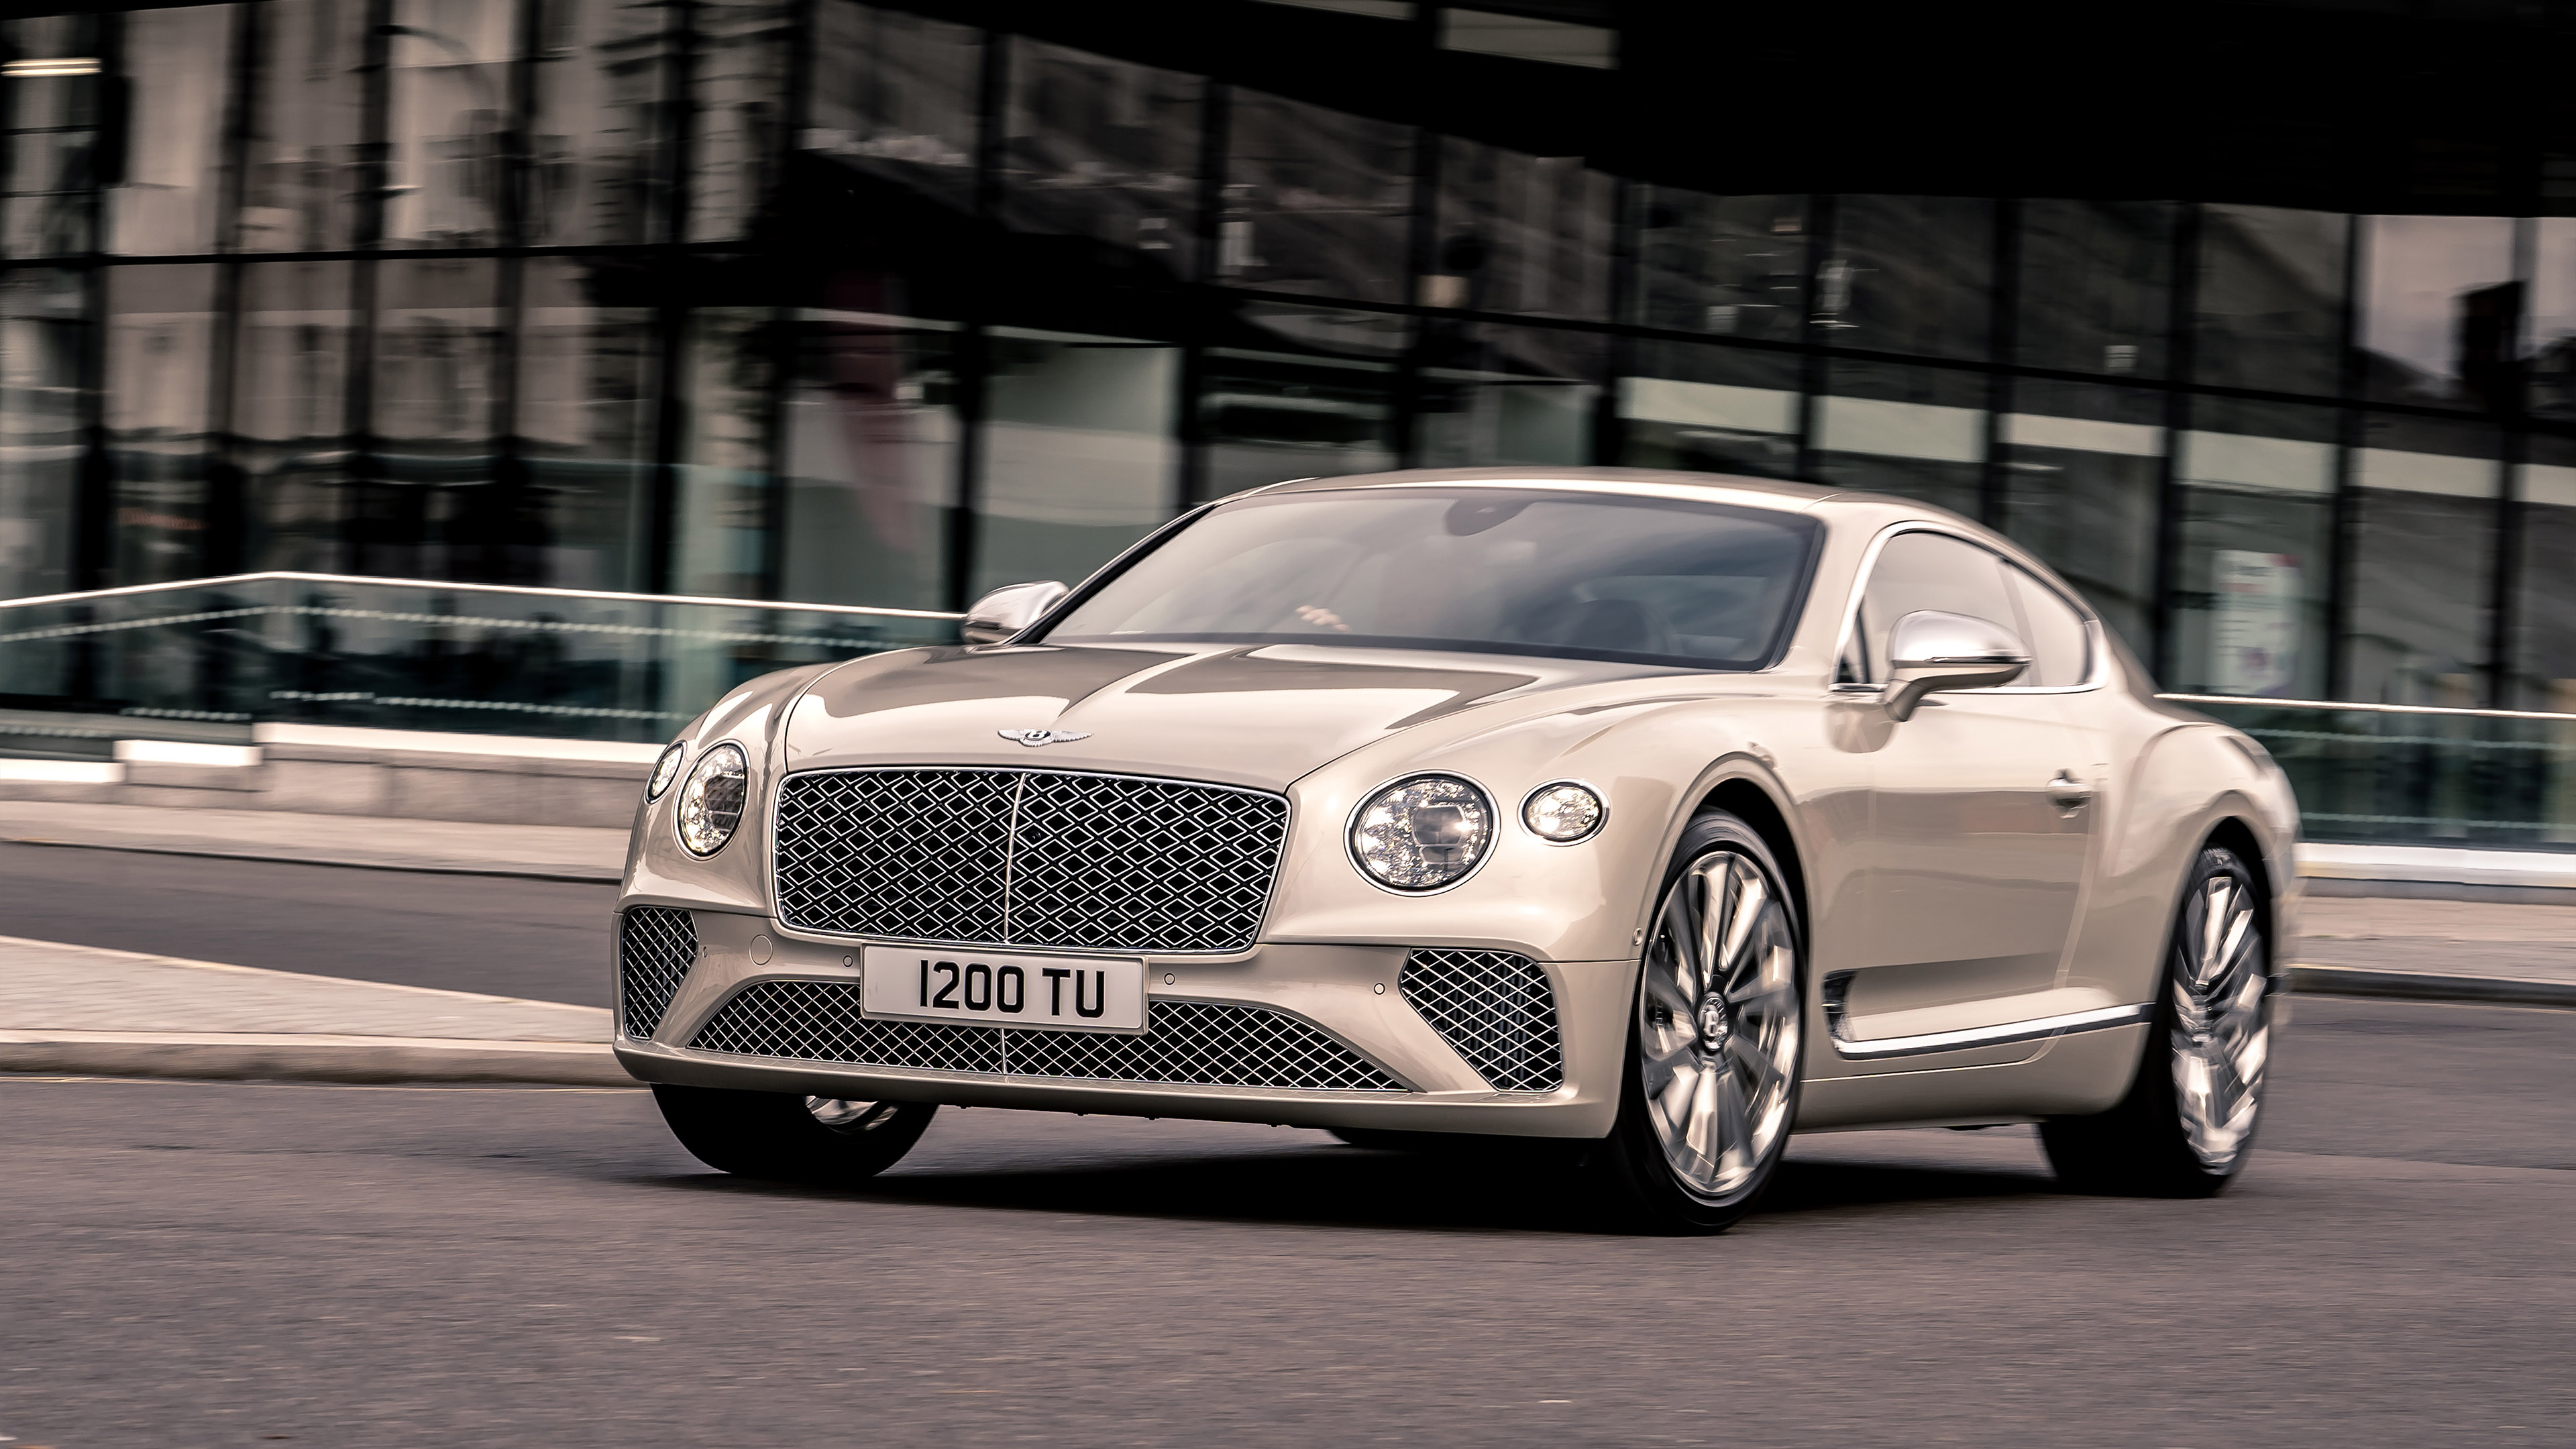 Baixe gratuitamente a imagem Bentley, Carro, Bentley Continental Gt, Veículos, Carro Prateado, Bentley Continental na área de trabalho do seu PC